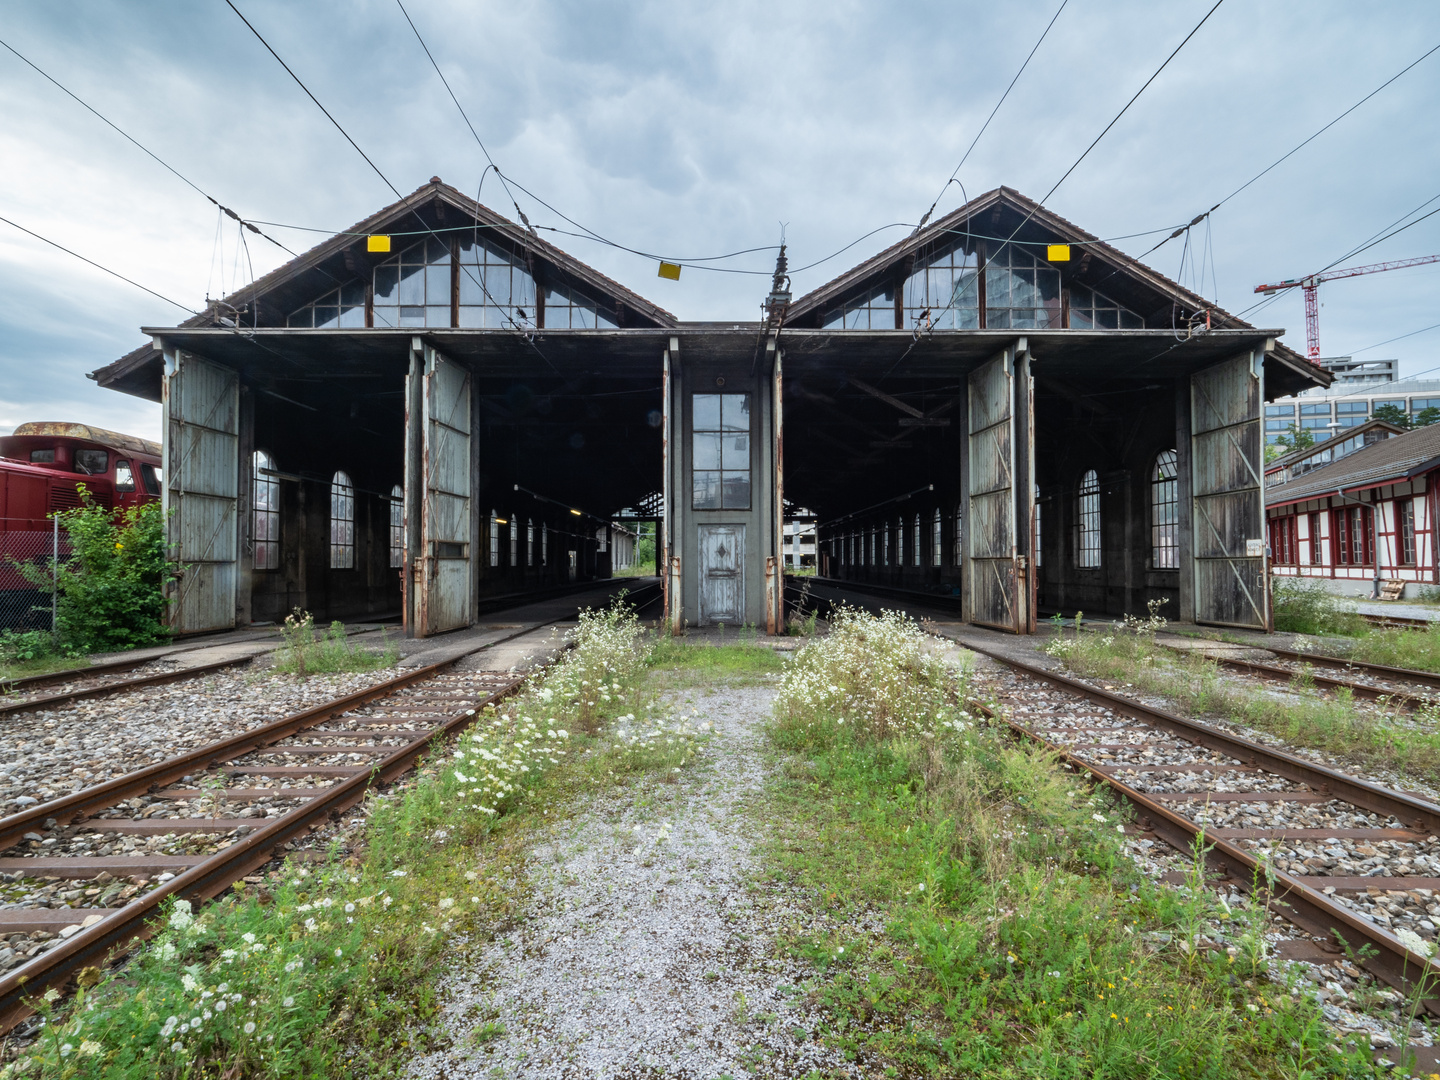 Lok_Depot_Winterthur_2021